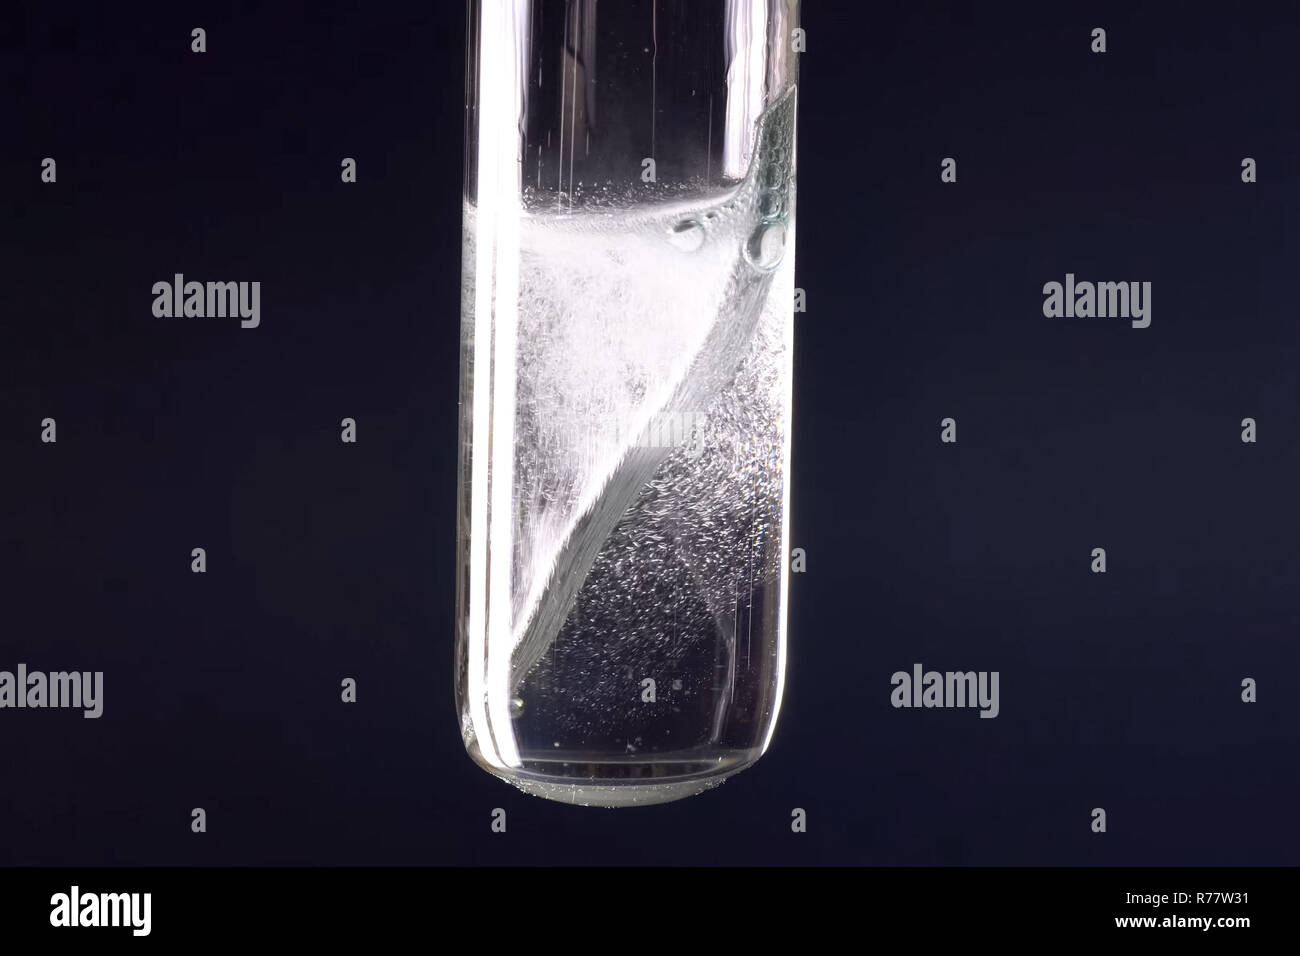 https://c8.alamy.com/comp/R77W31/laboratory-flask-with-a-tungsten-plate-in-alkali-R77W31.jpg